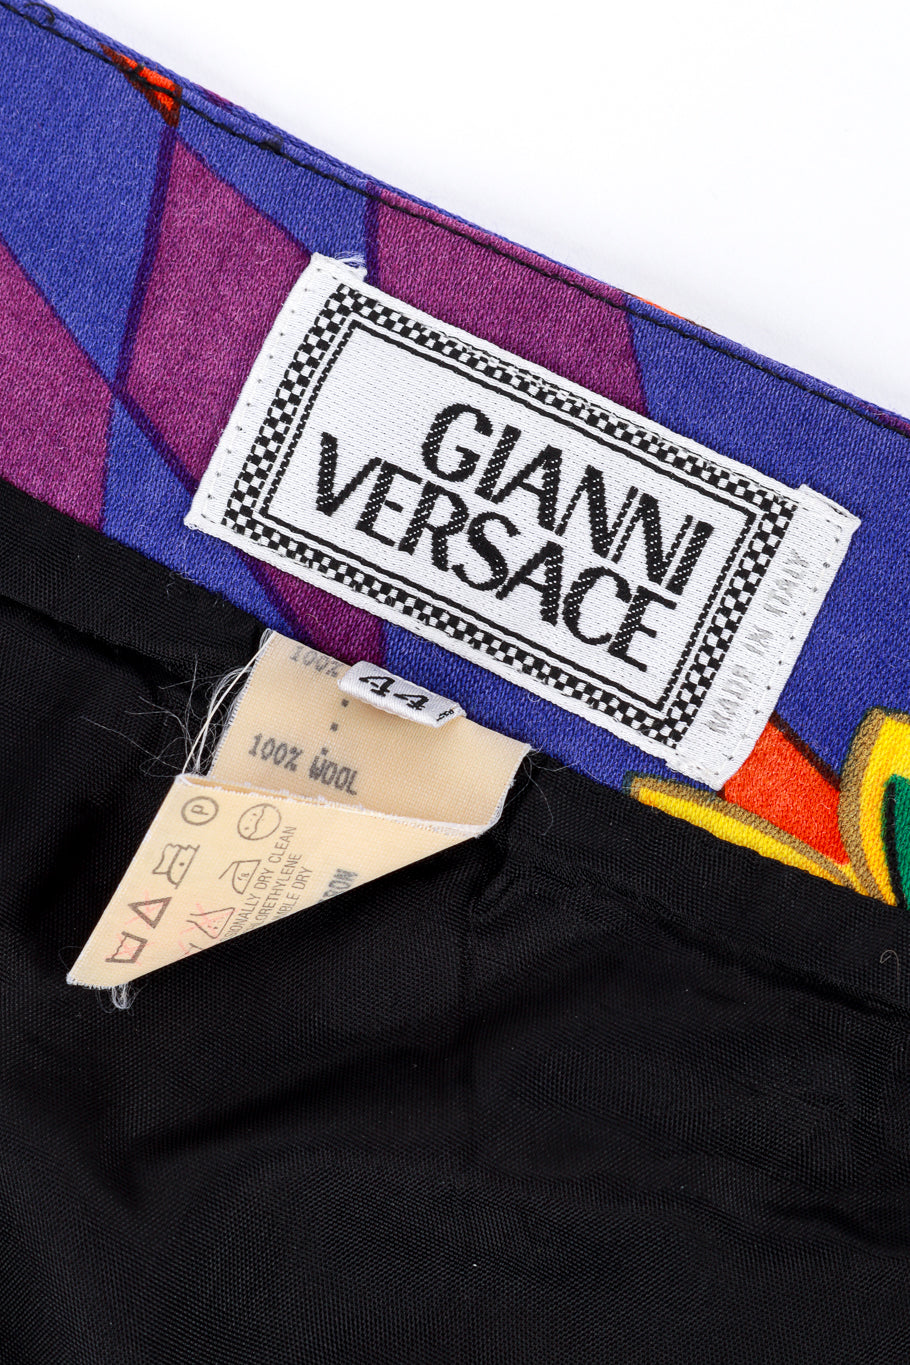 Versace 1991 Cornucopia of Prints Skirt Suit label @RECESS LA